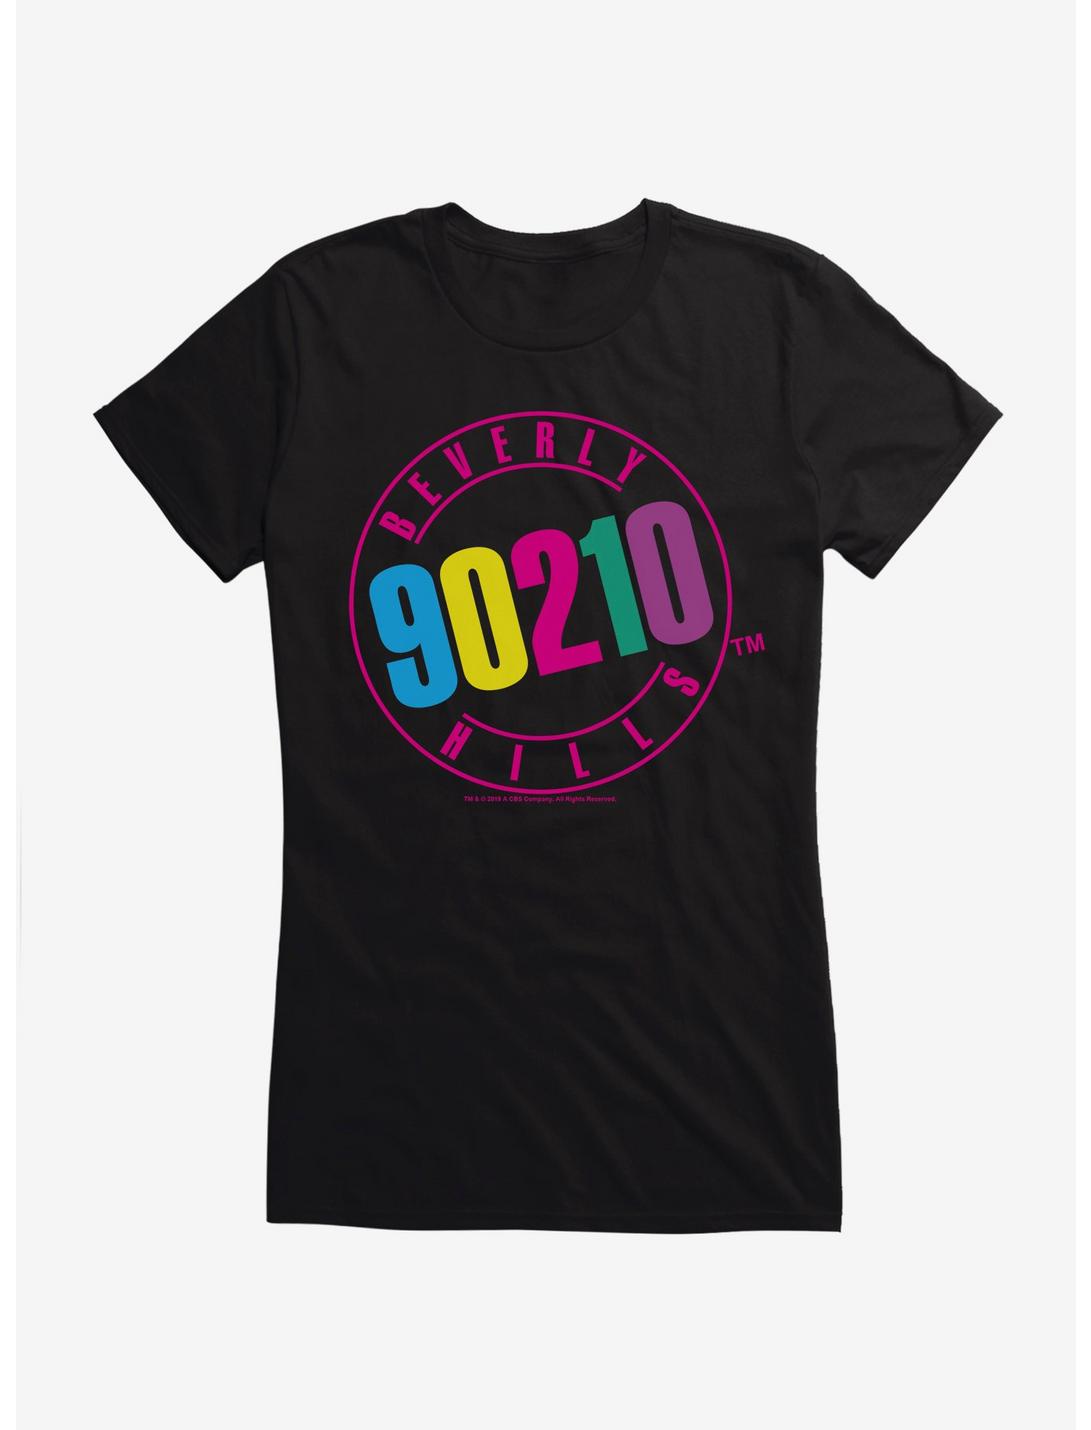 Beverly Hills 90210 Logo Girls T-Shirt, BLACK, hi-res